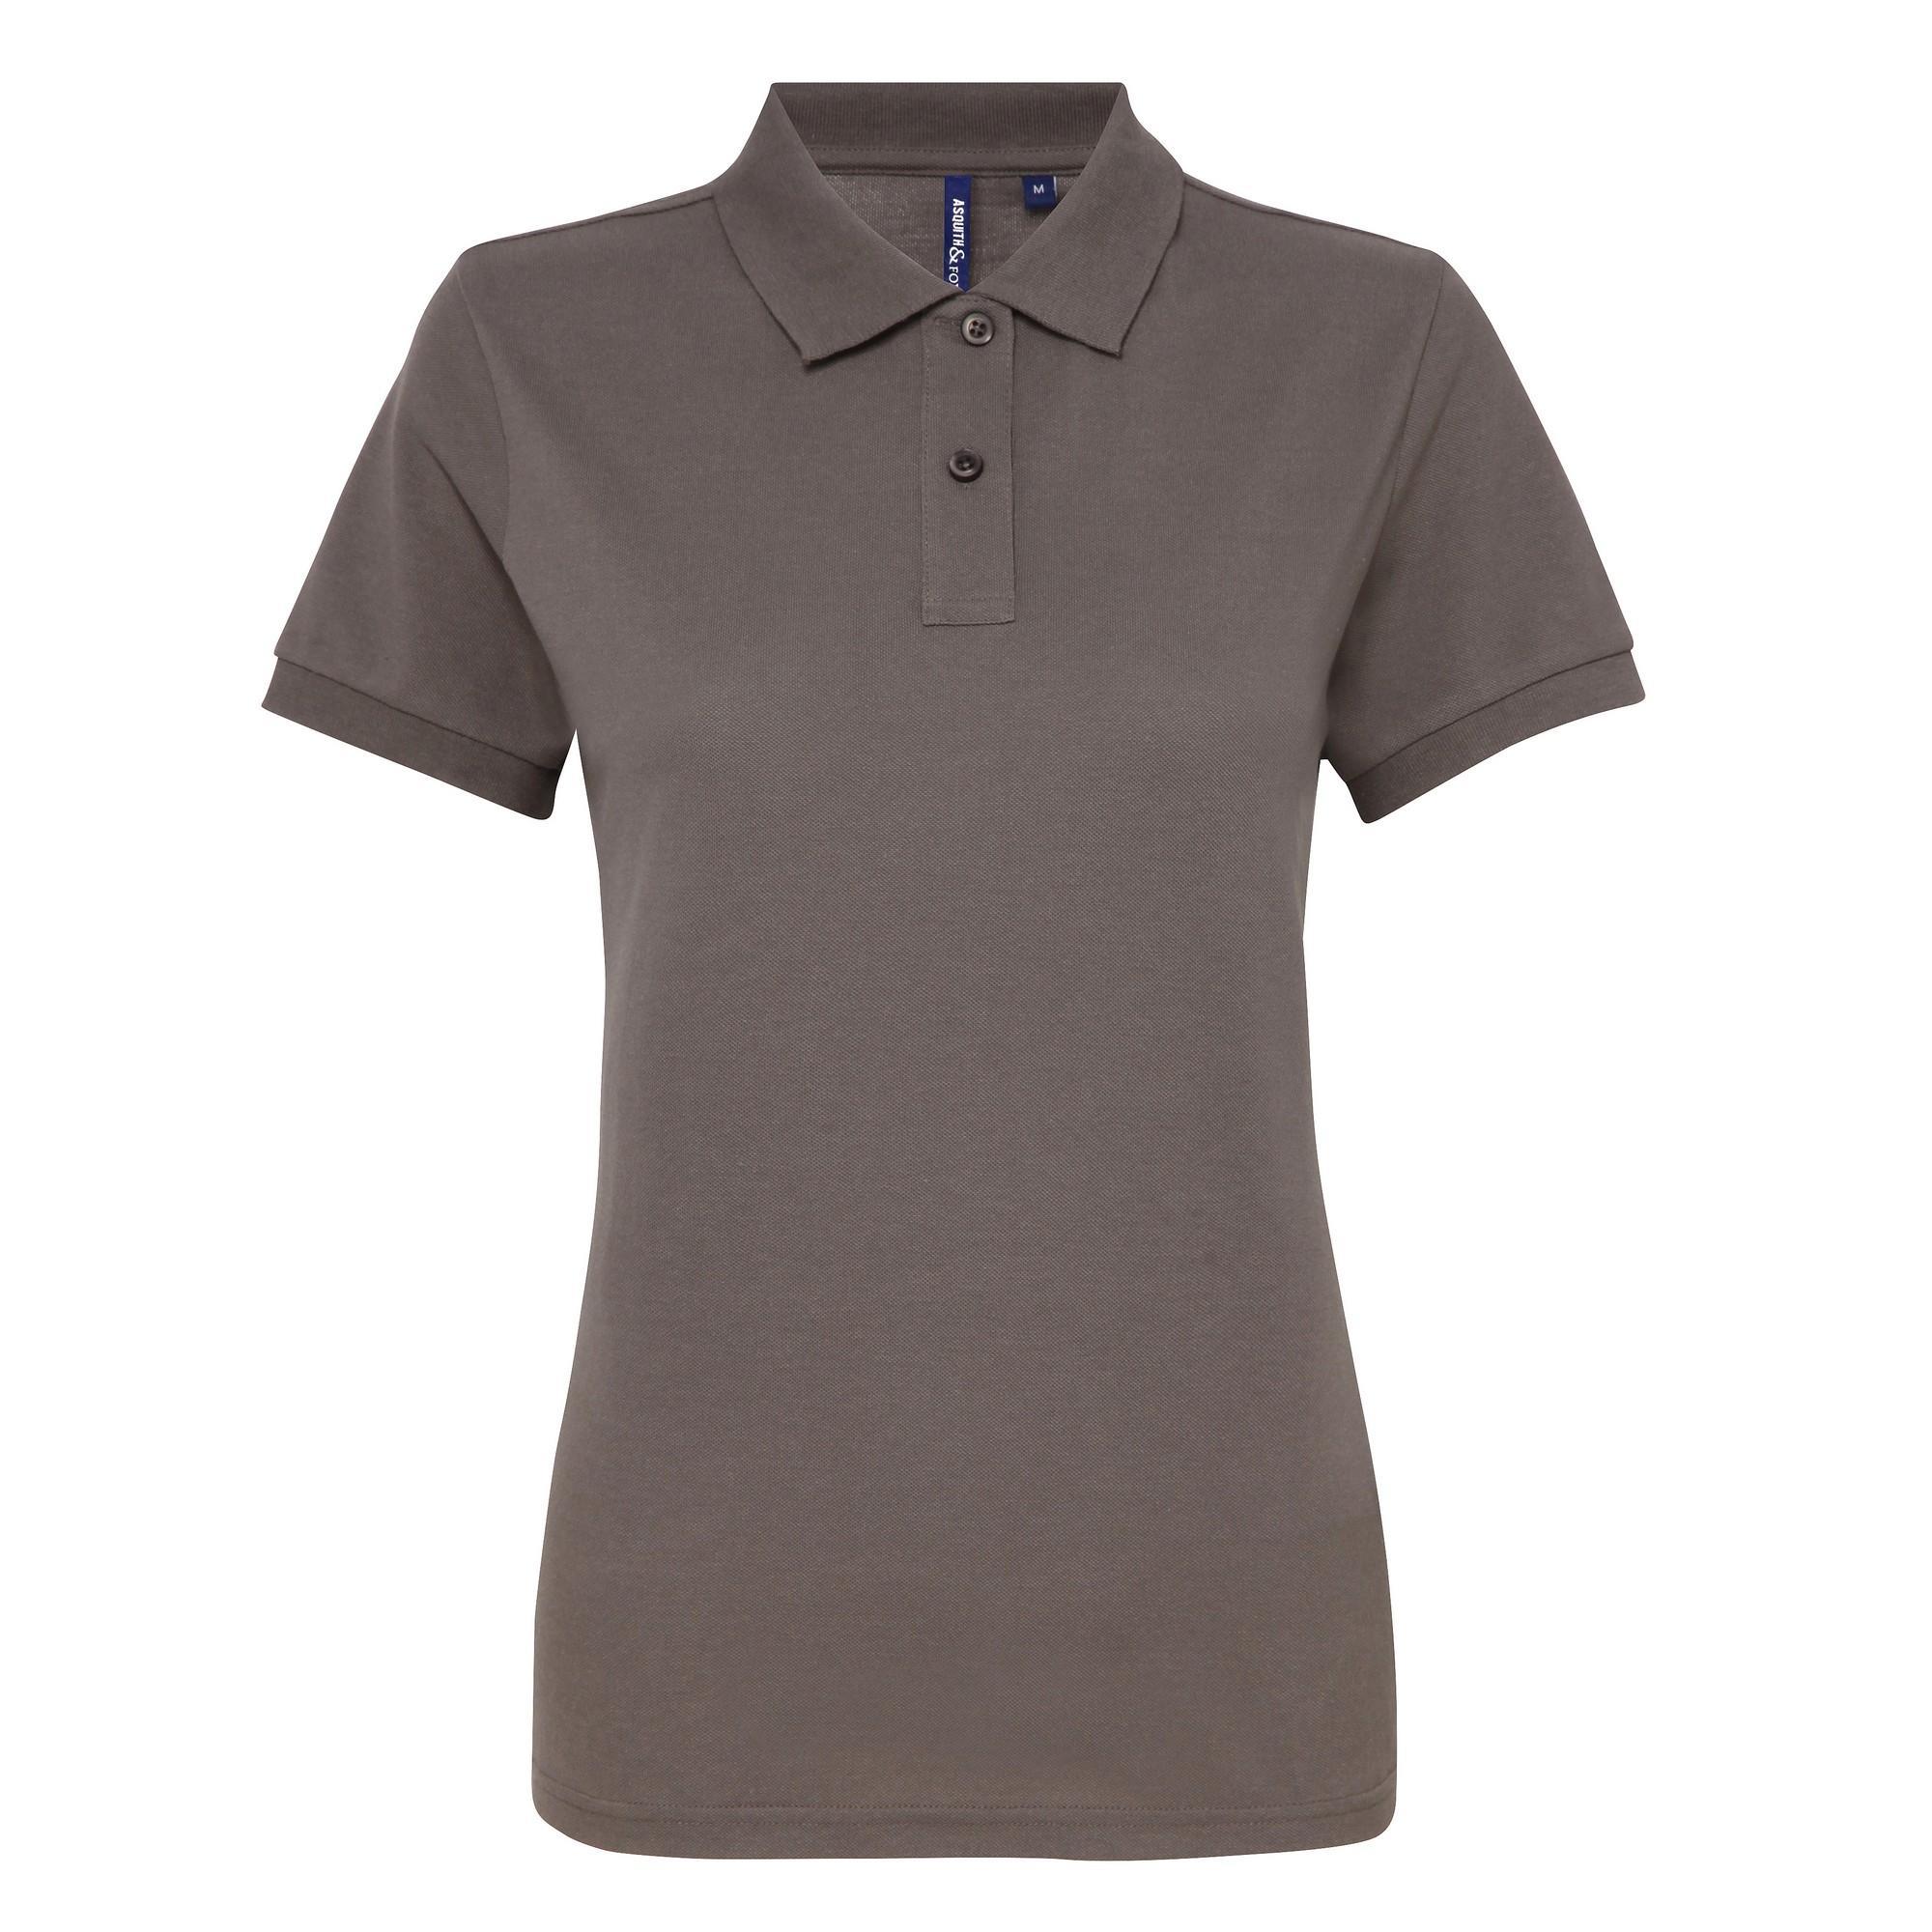 Asquith & Fox Womens/Ladies Short Sleeve Performance Blend Polo Shirt (Slate) (M)